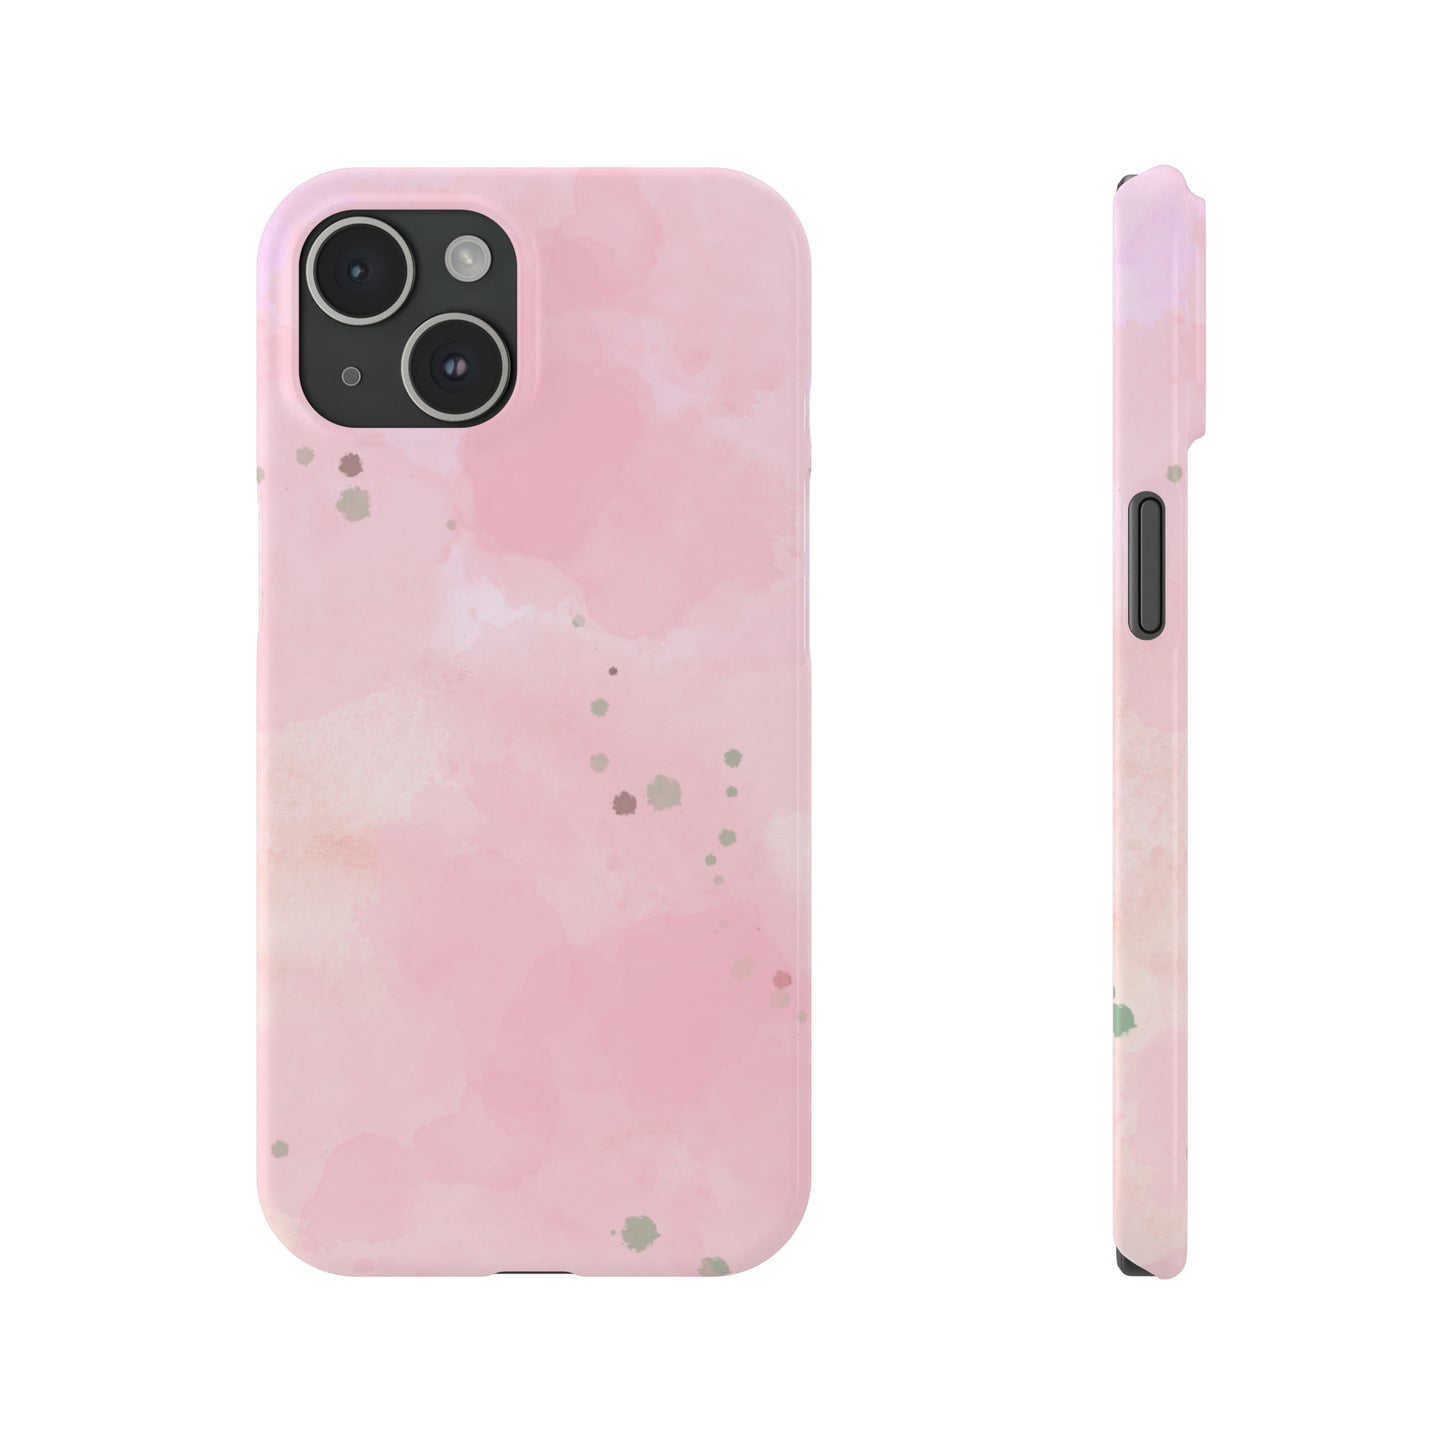 Soft Pink Slim Phone Cases